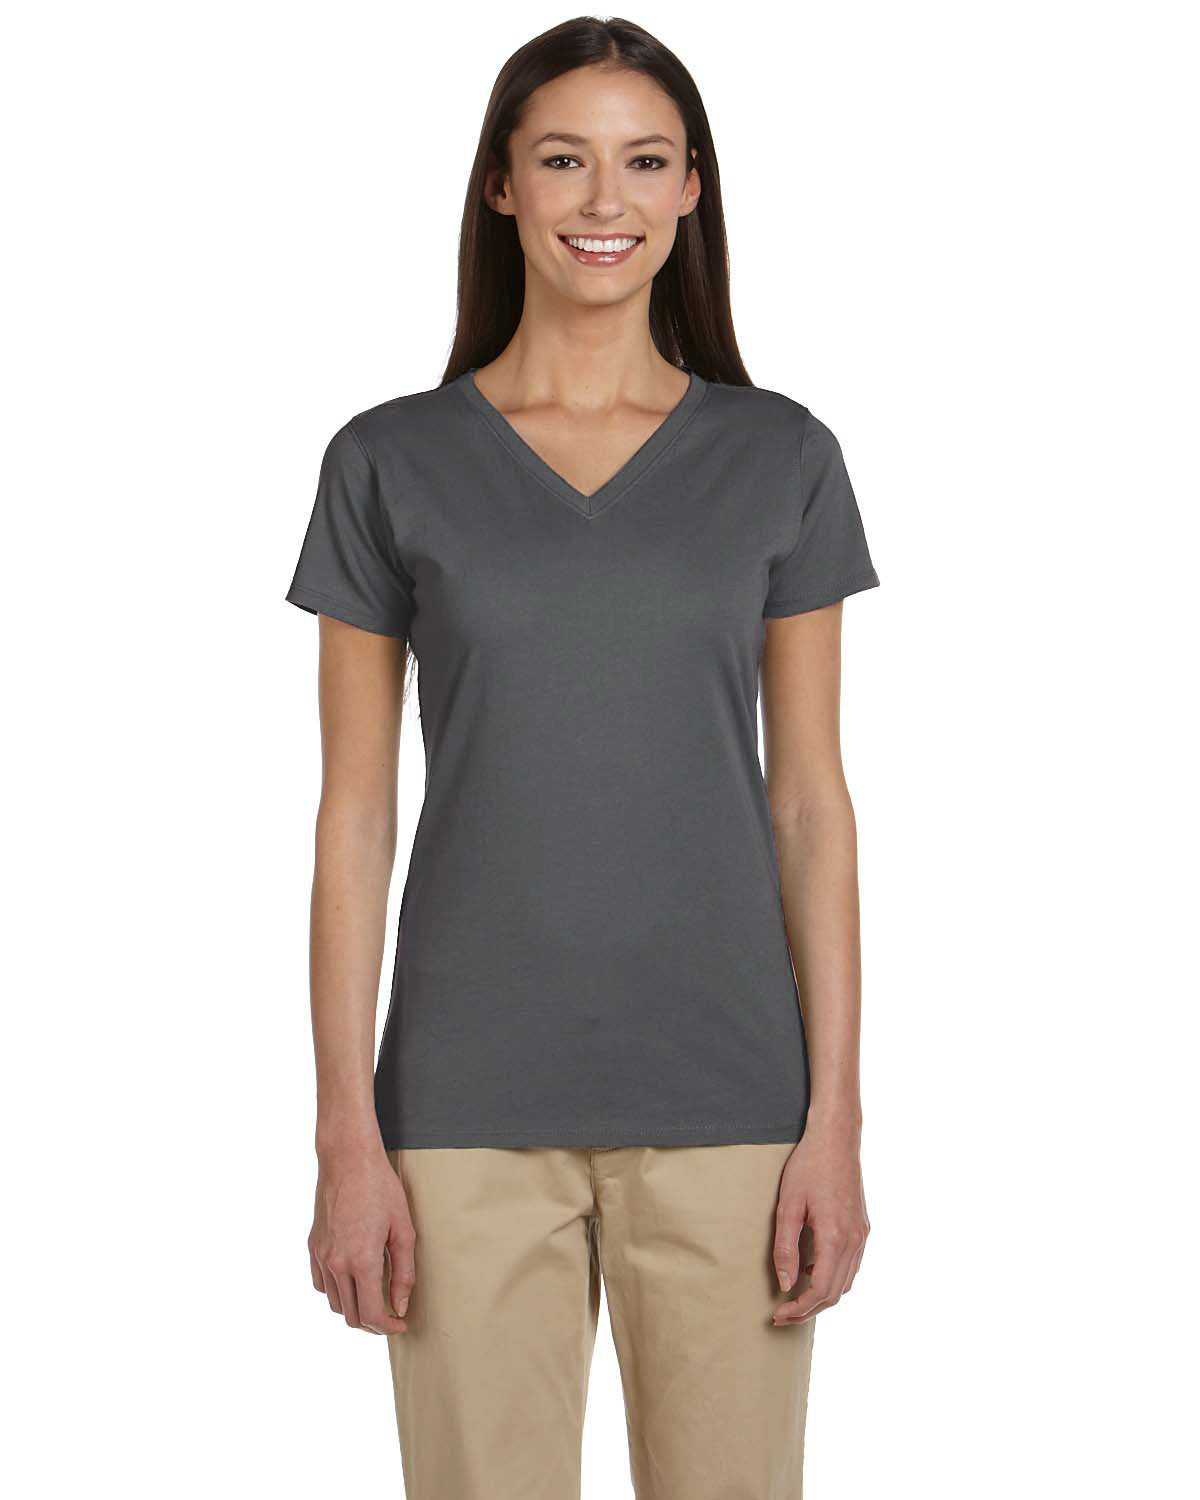 Customizable Econscious Women's v-neck t-shirt in gray.